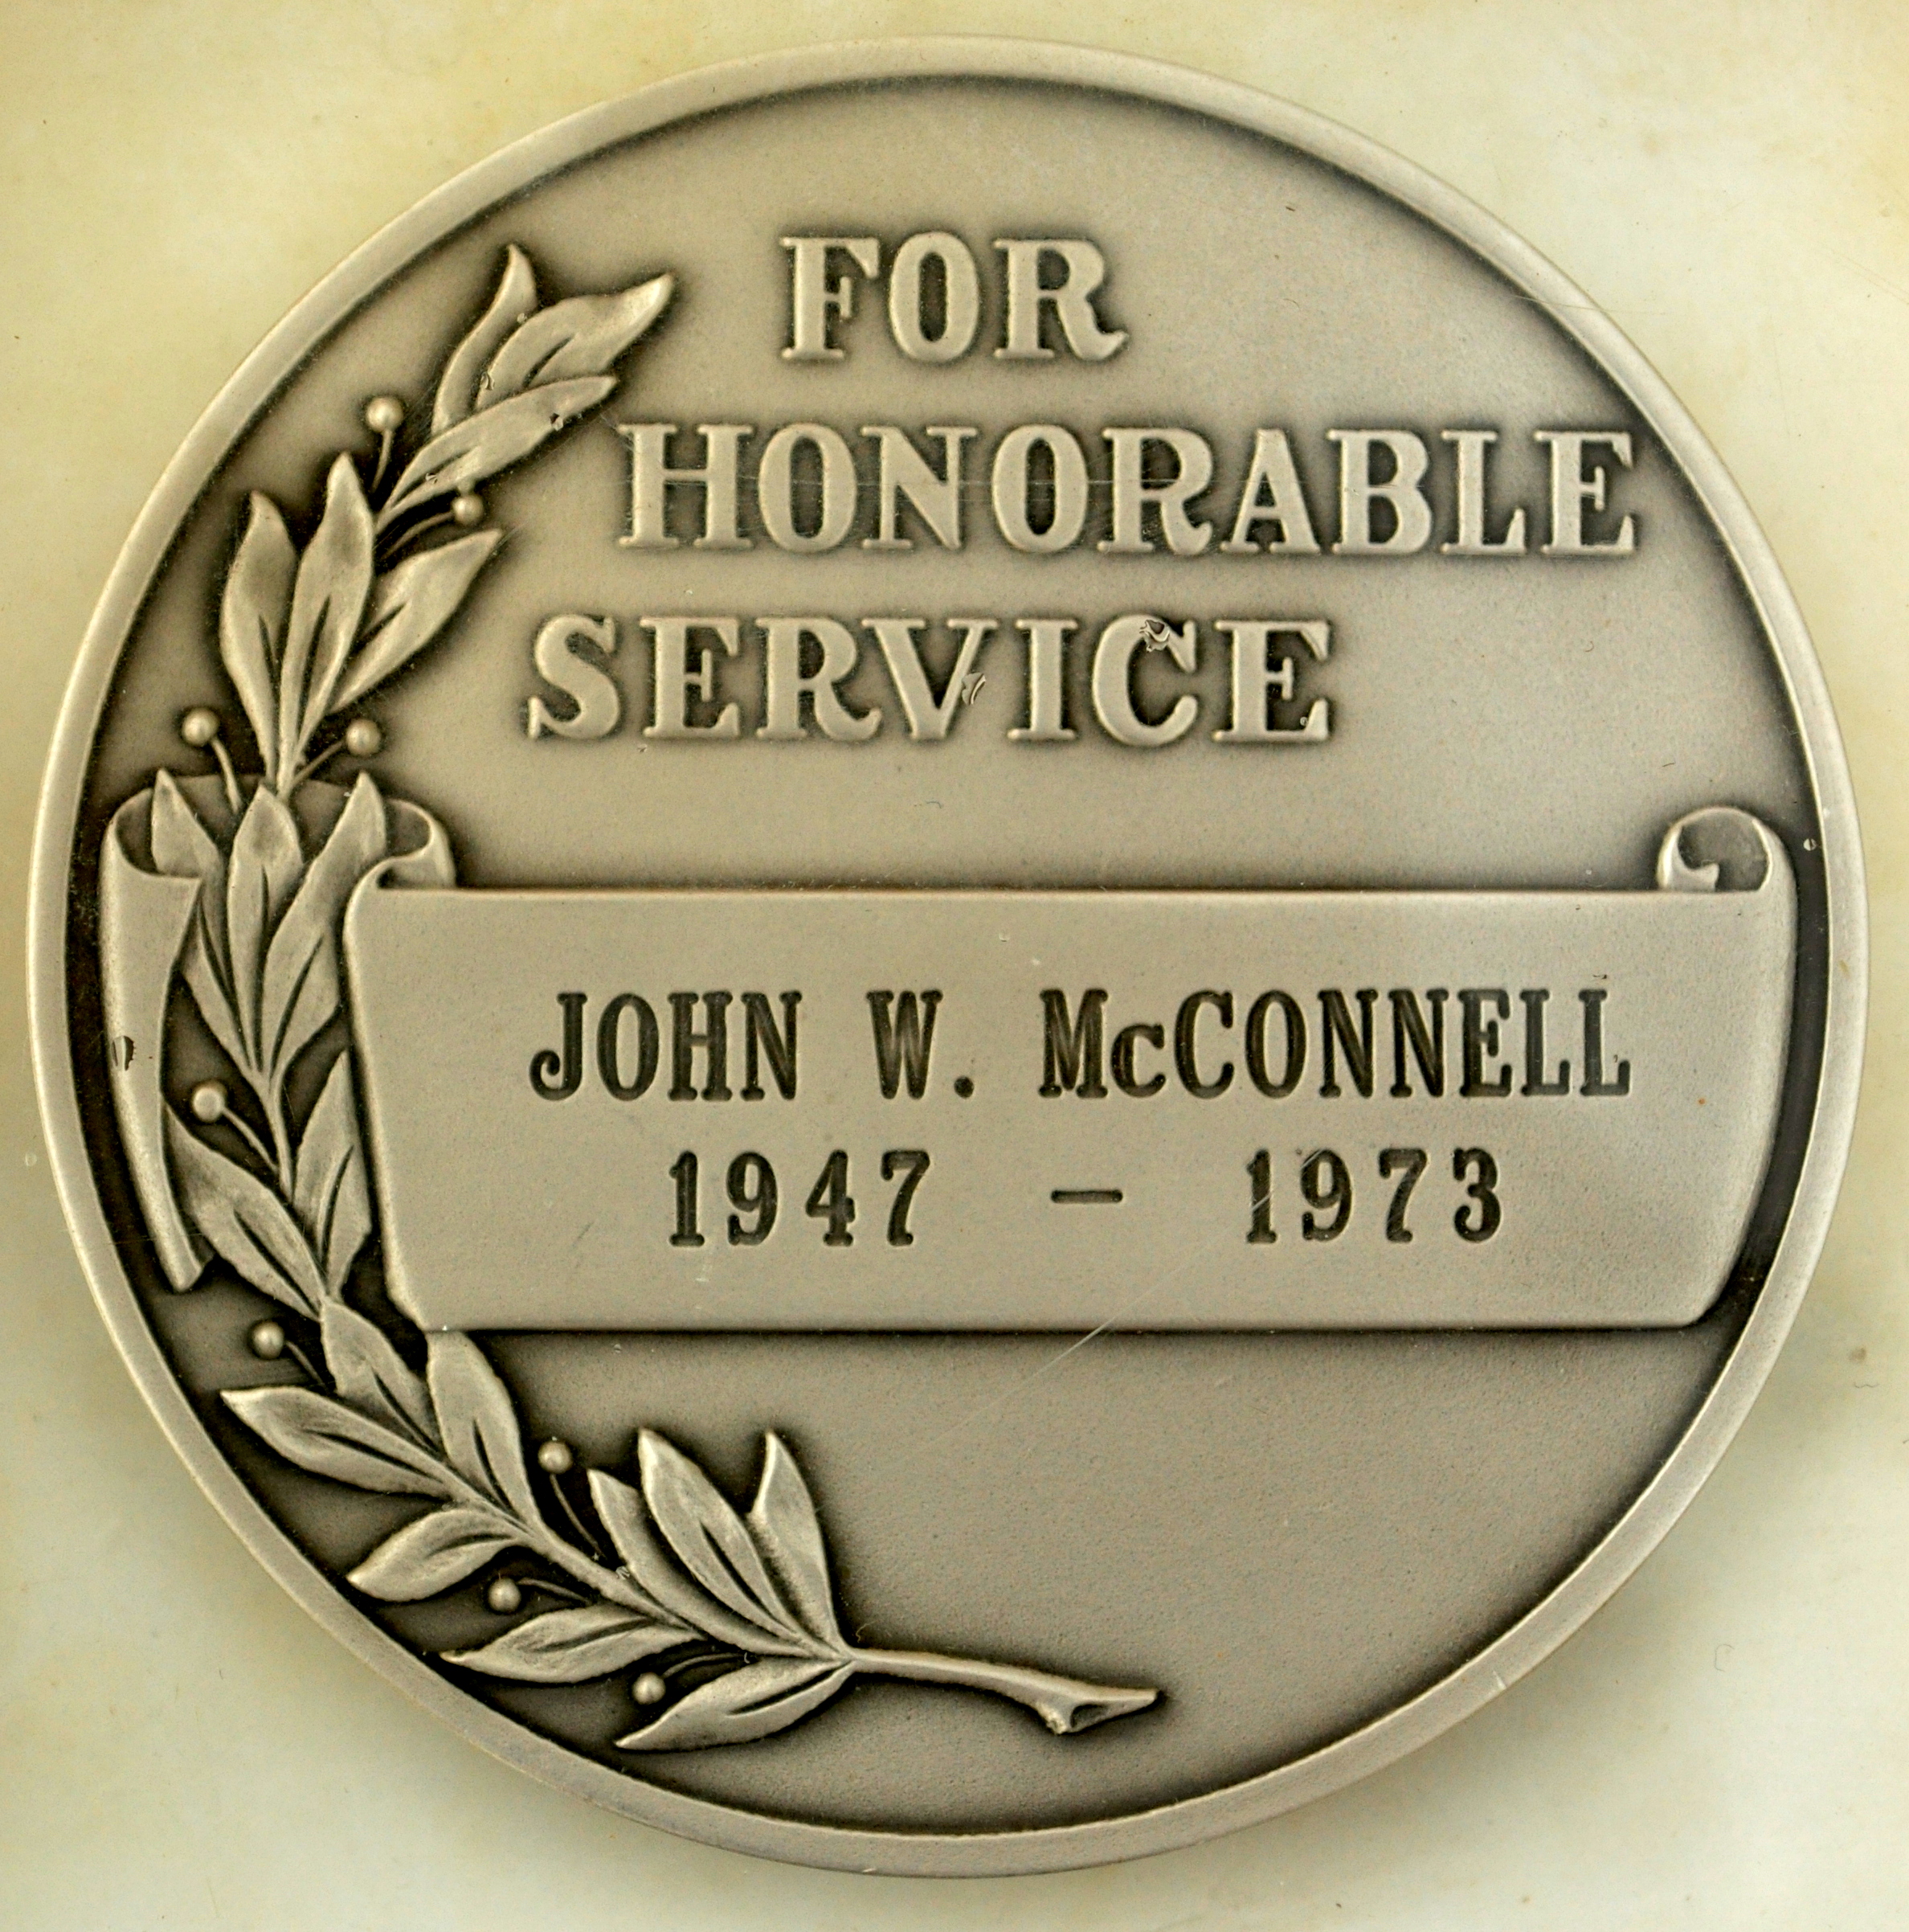 John W. McConnell’s CIA medal (back)